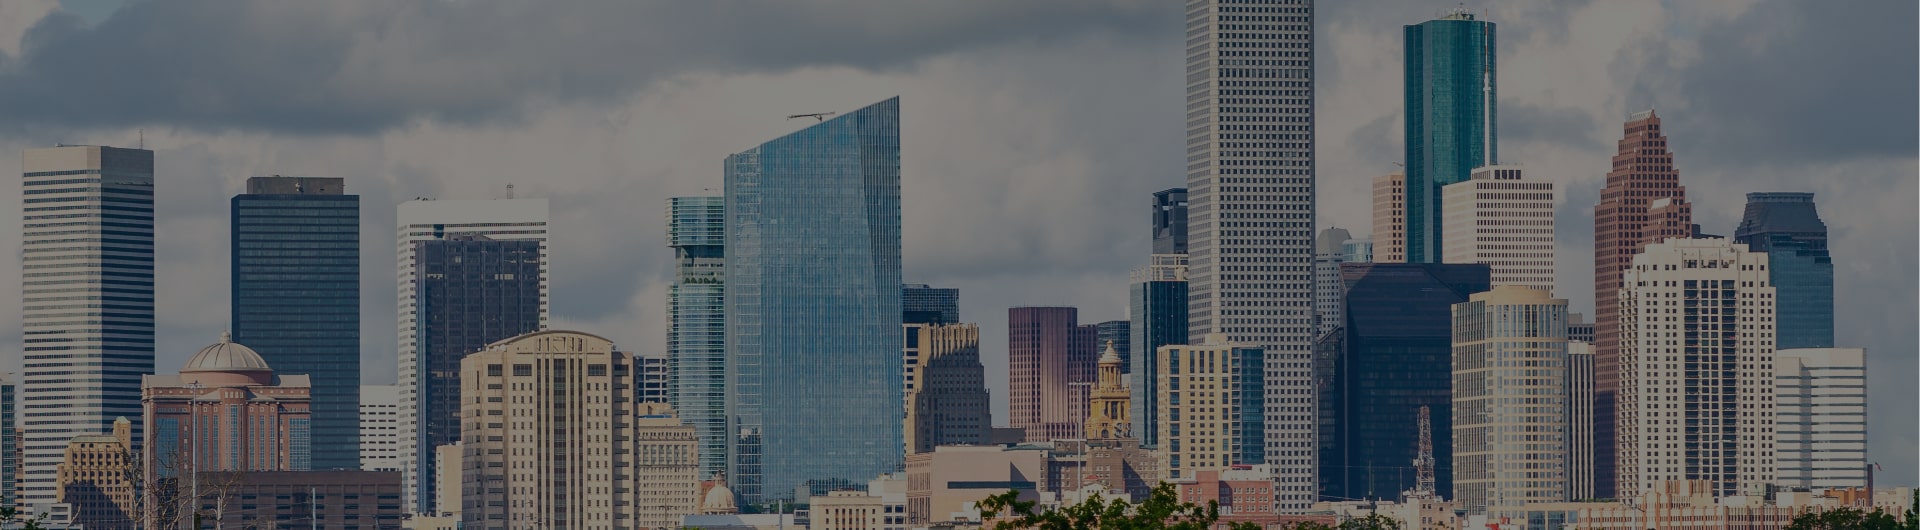 The Houston Skyline District.